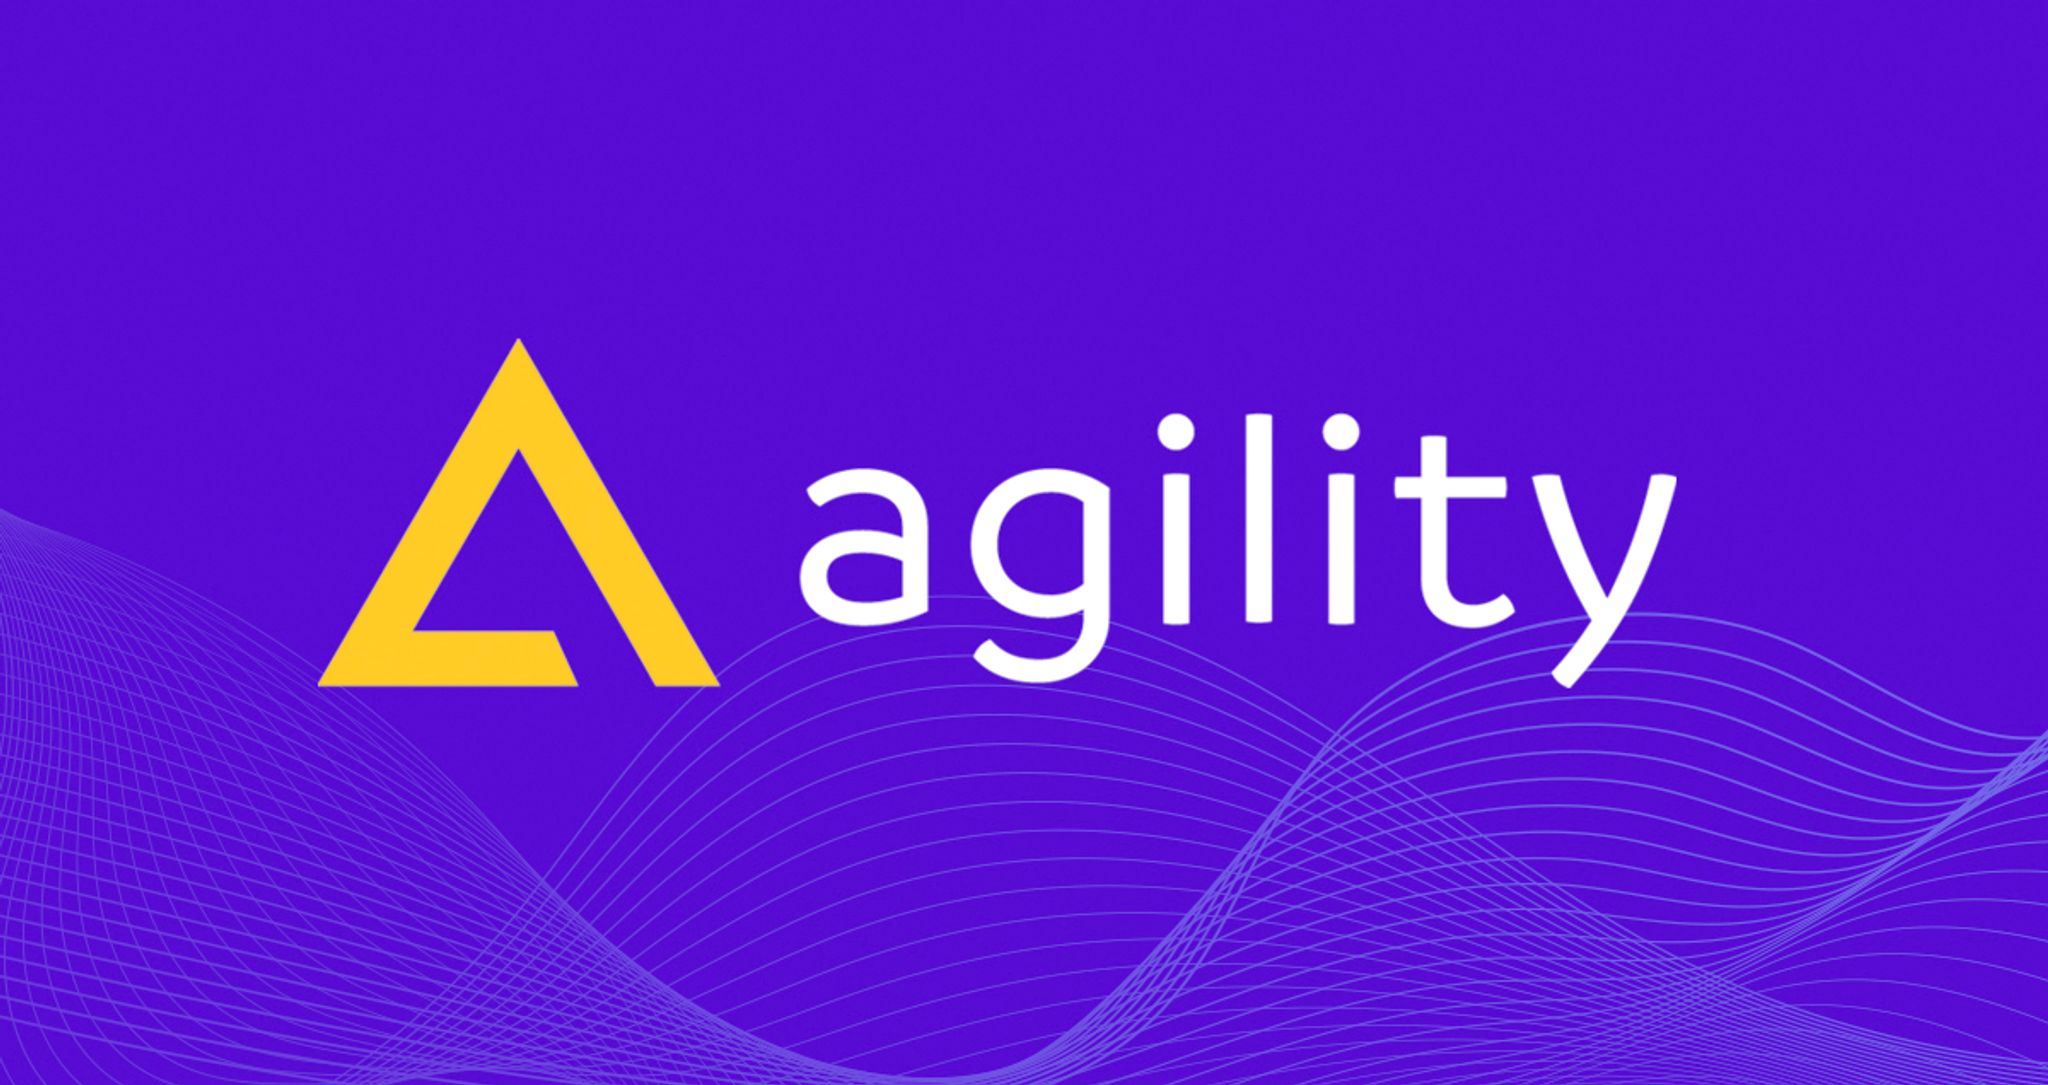 Agility logo against a digital wave background